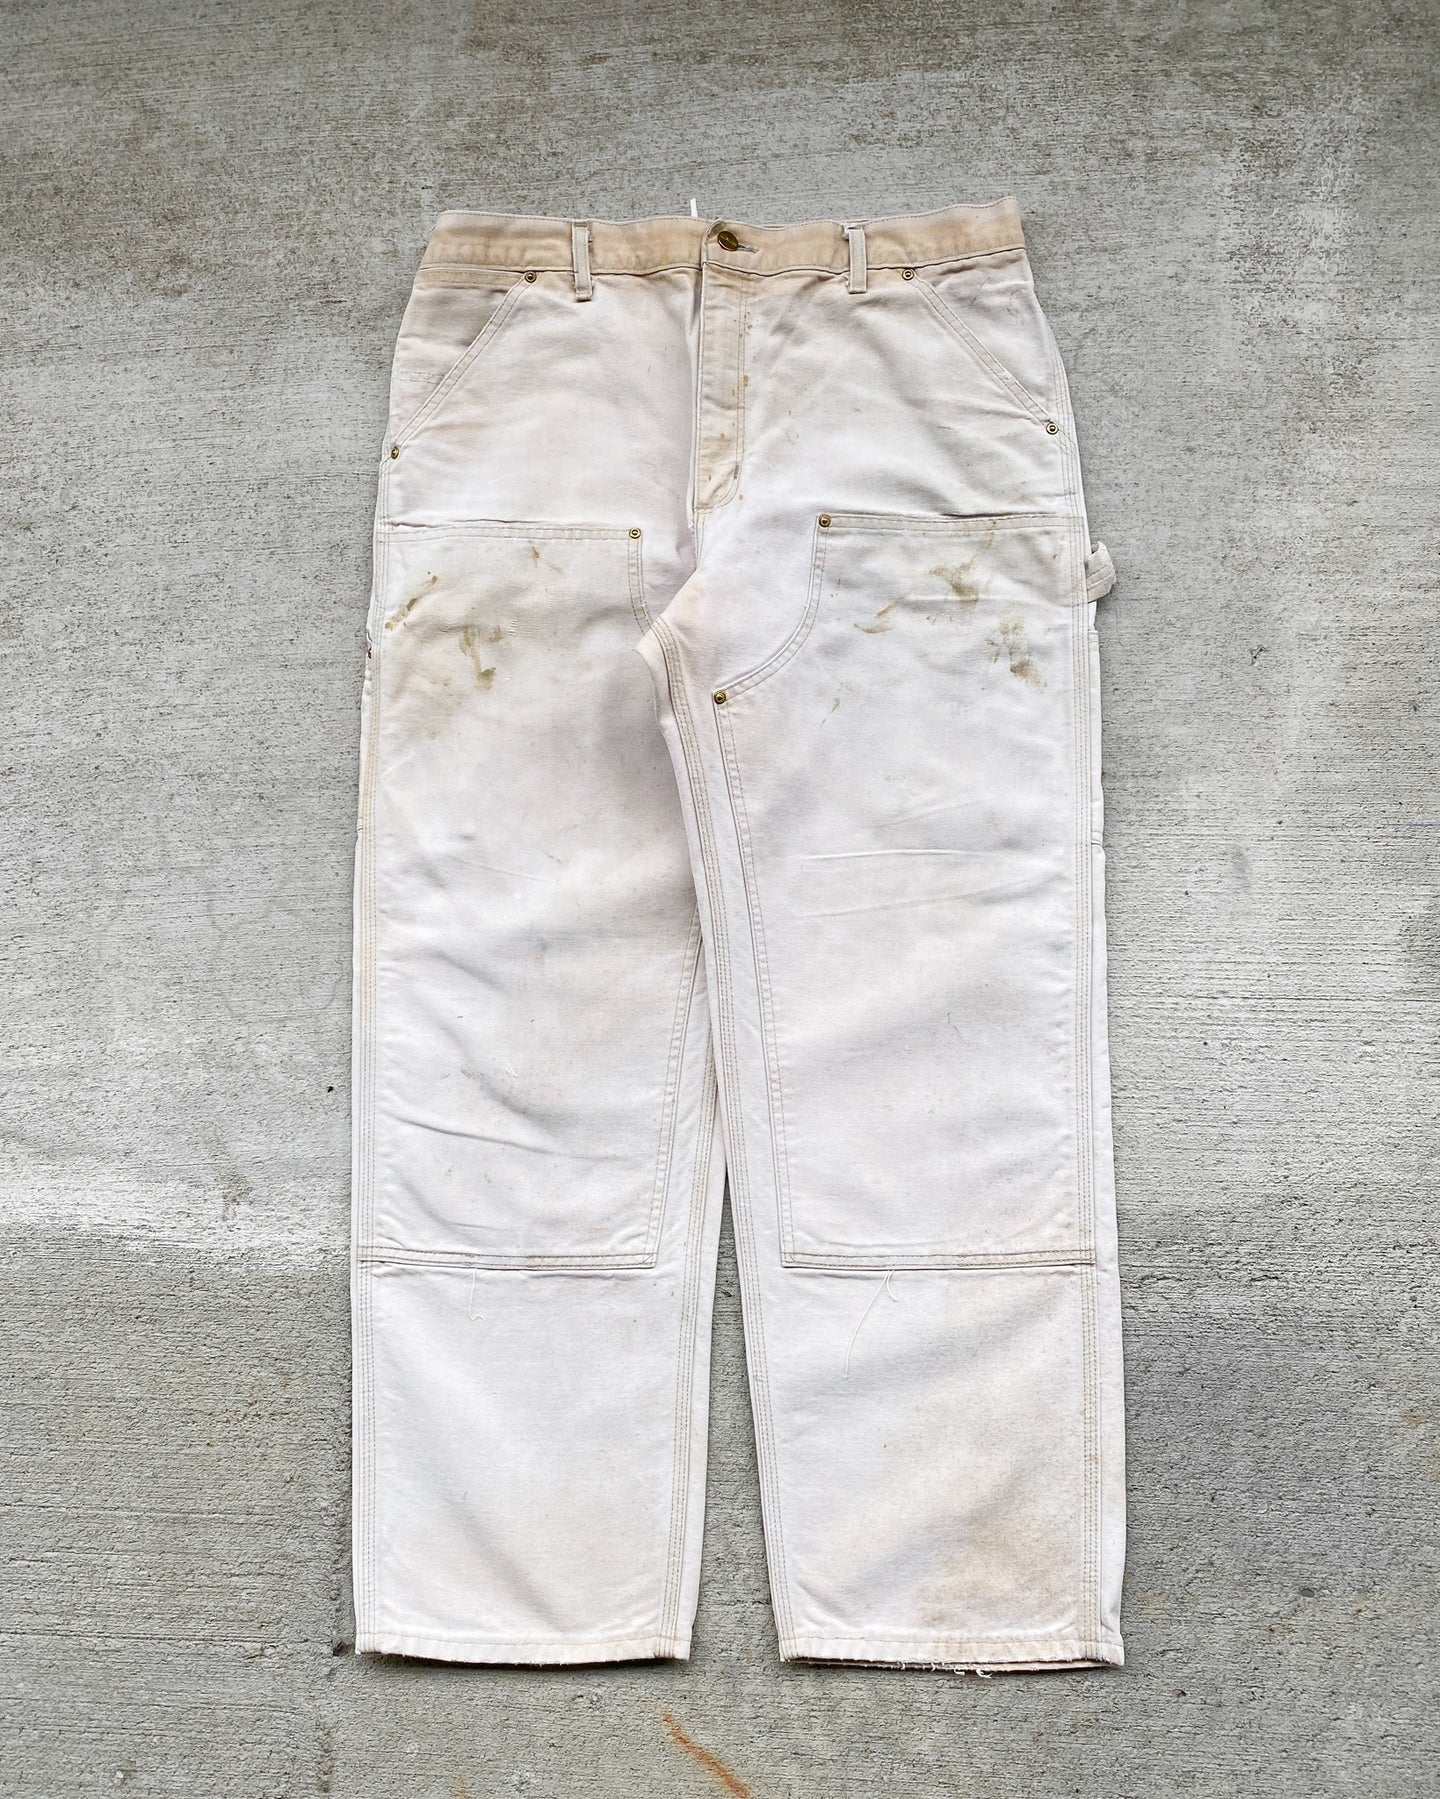 1990s Carhartt Sun Bleached Double Knee Pants - Size 36 x 30